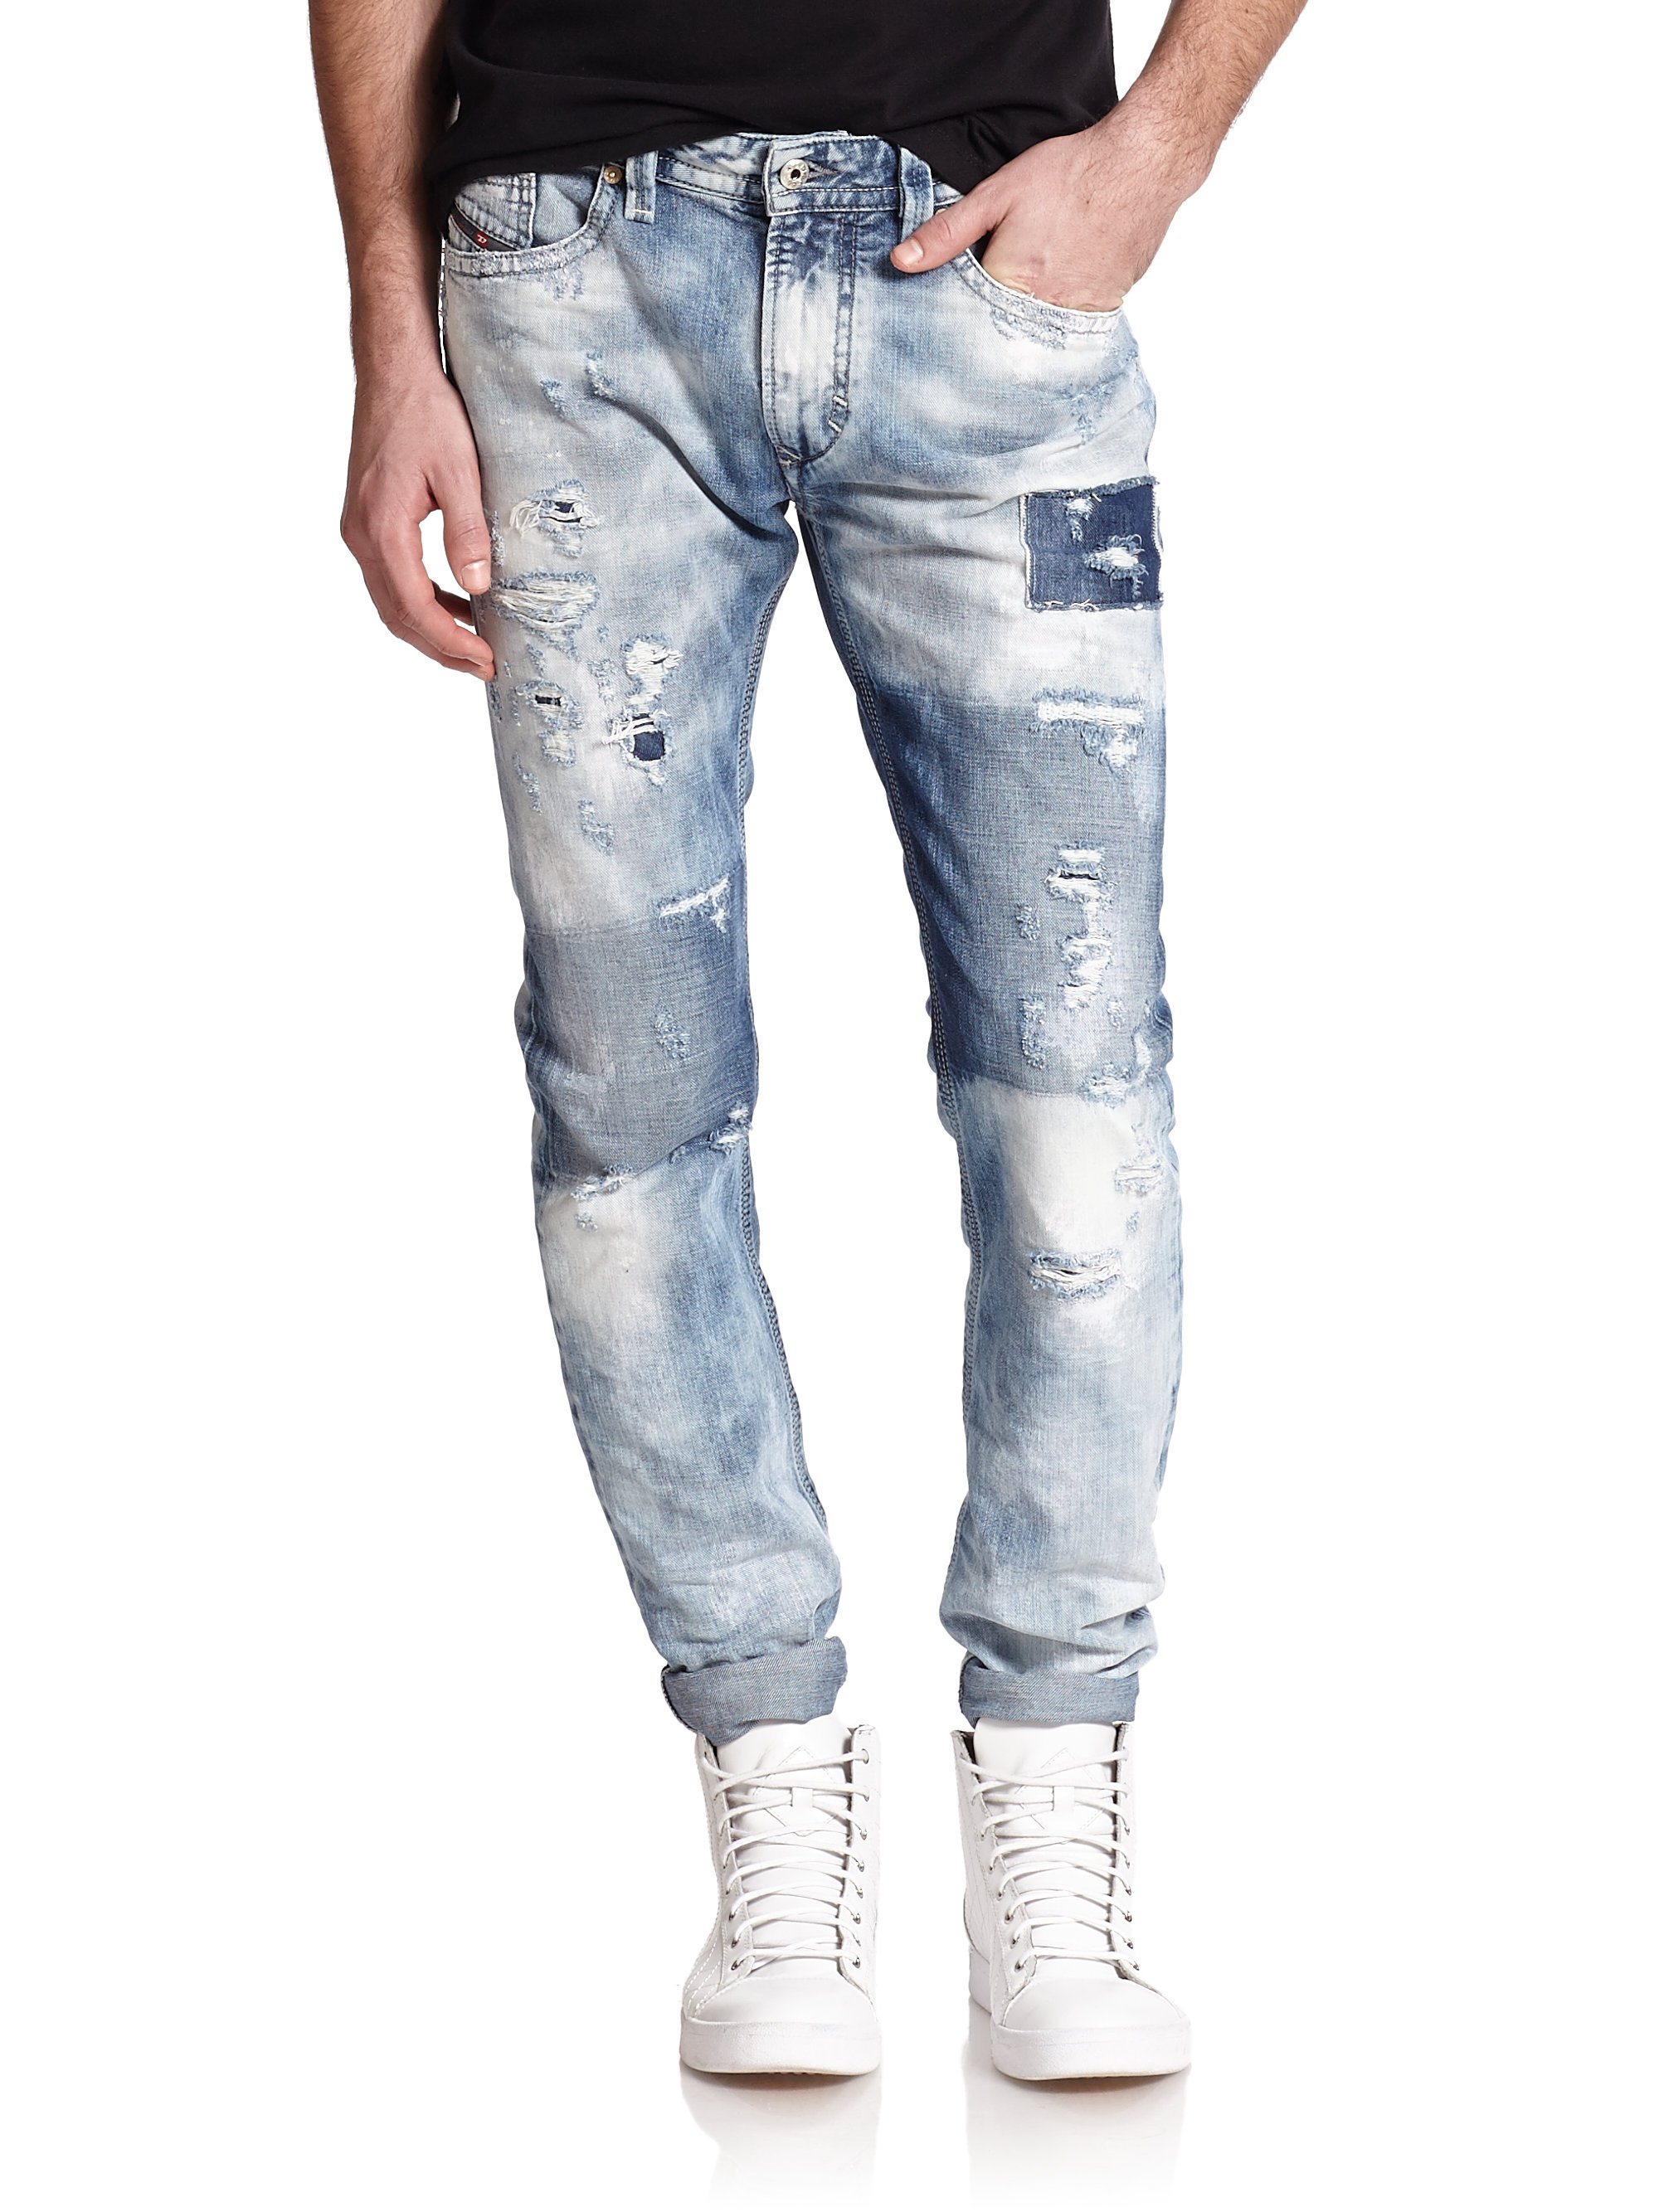 Lyst - Diesel Thavar Distressed Patchwork Slim-fit Jeans in Blue for Men